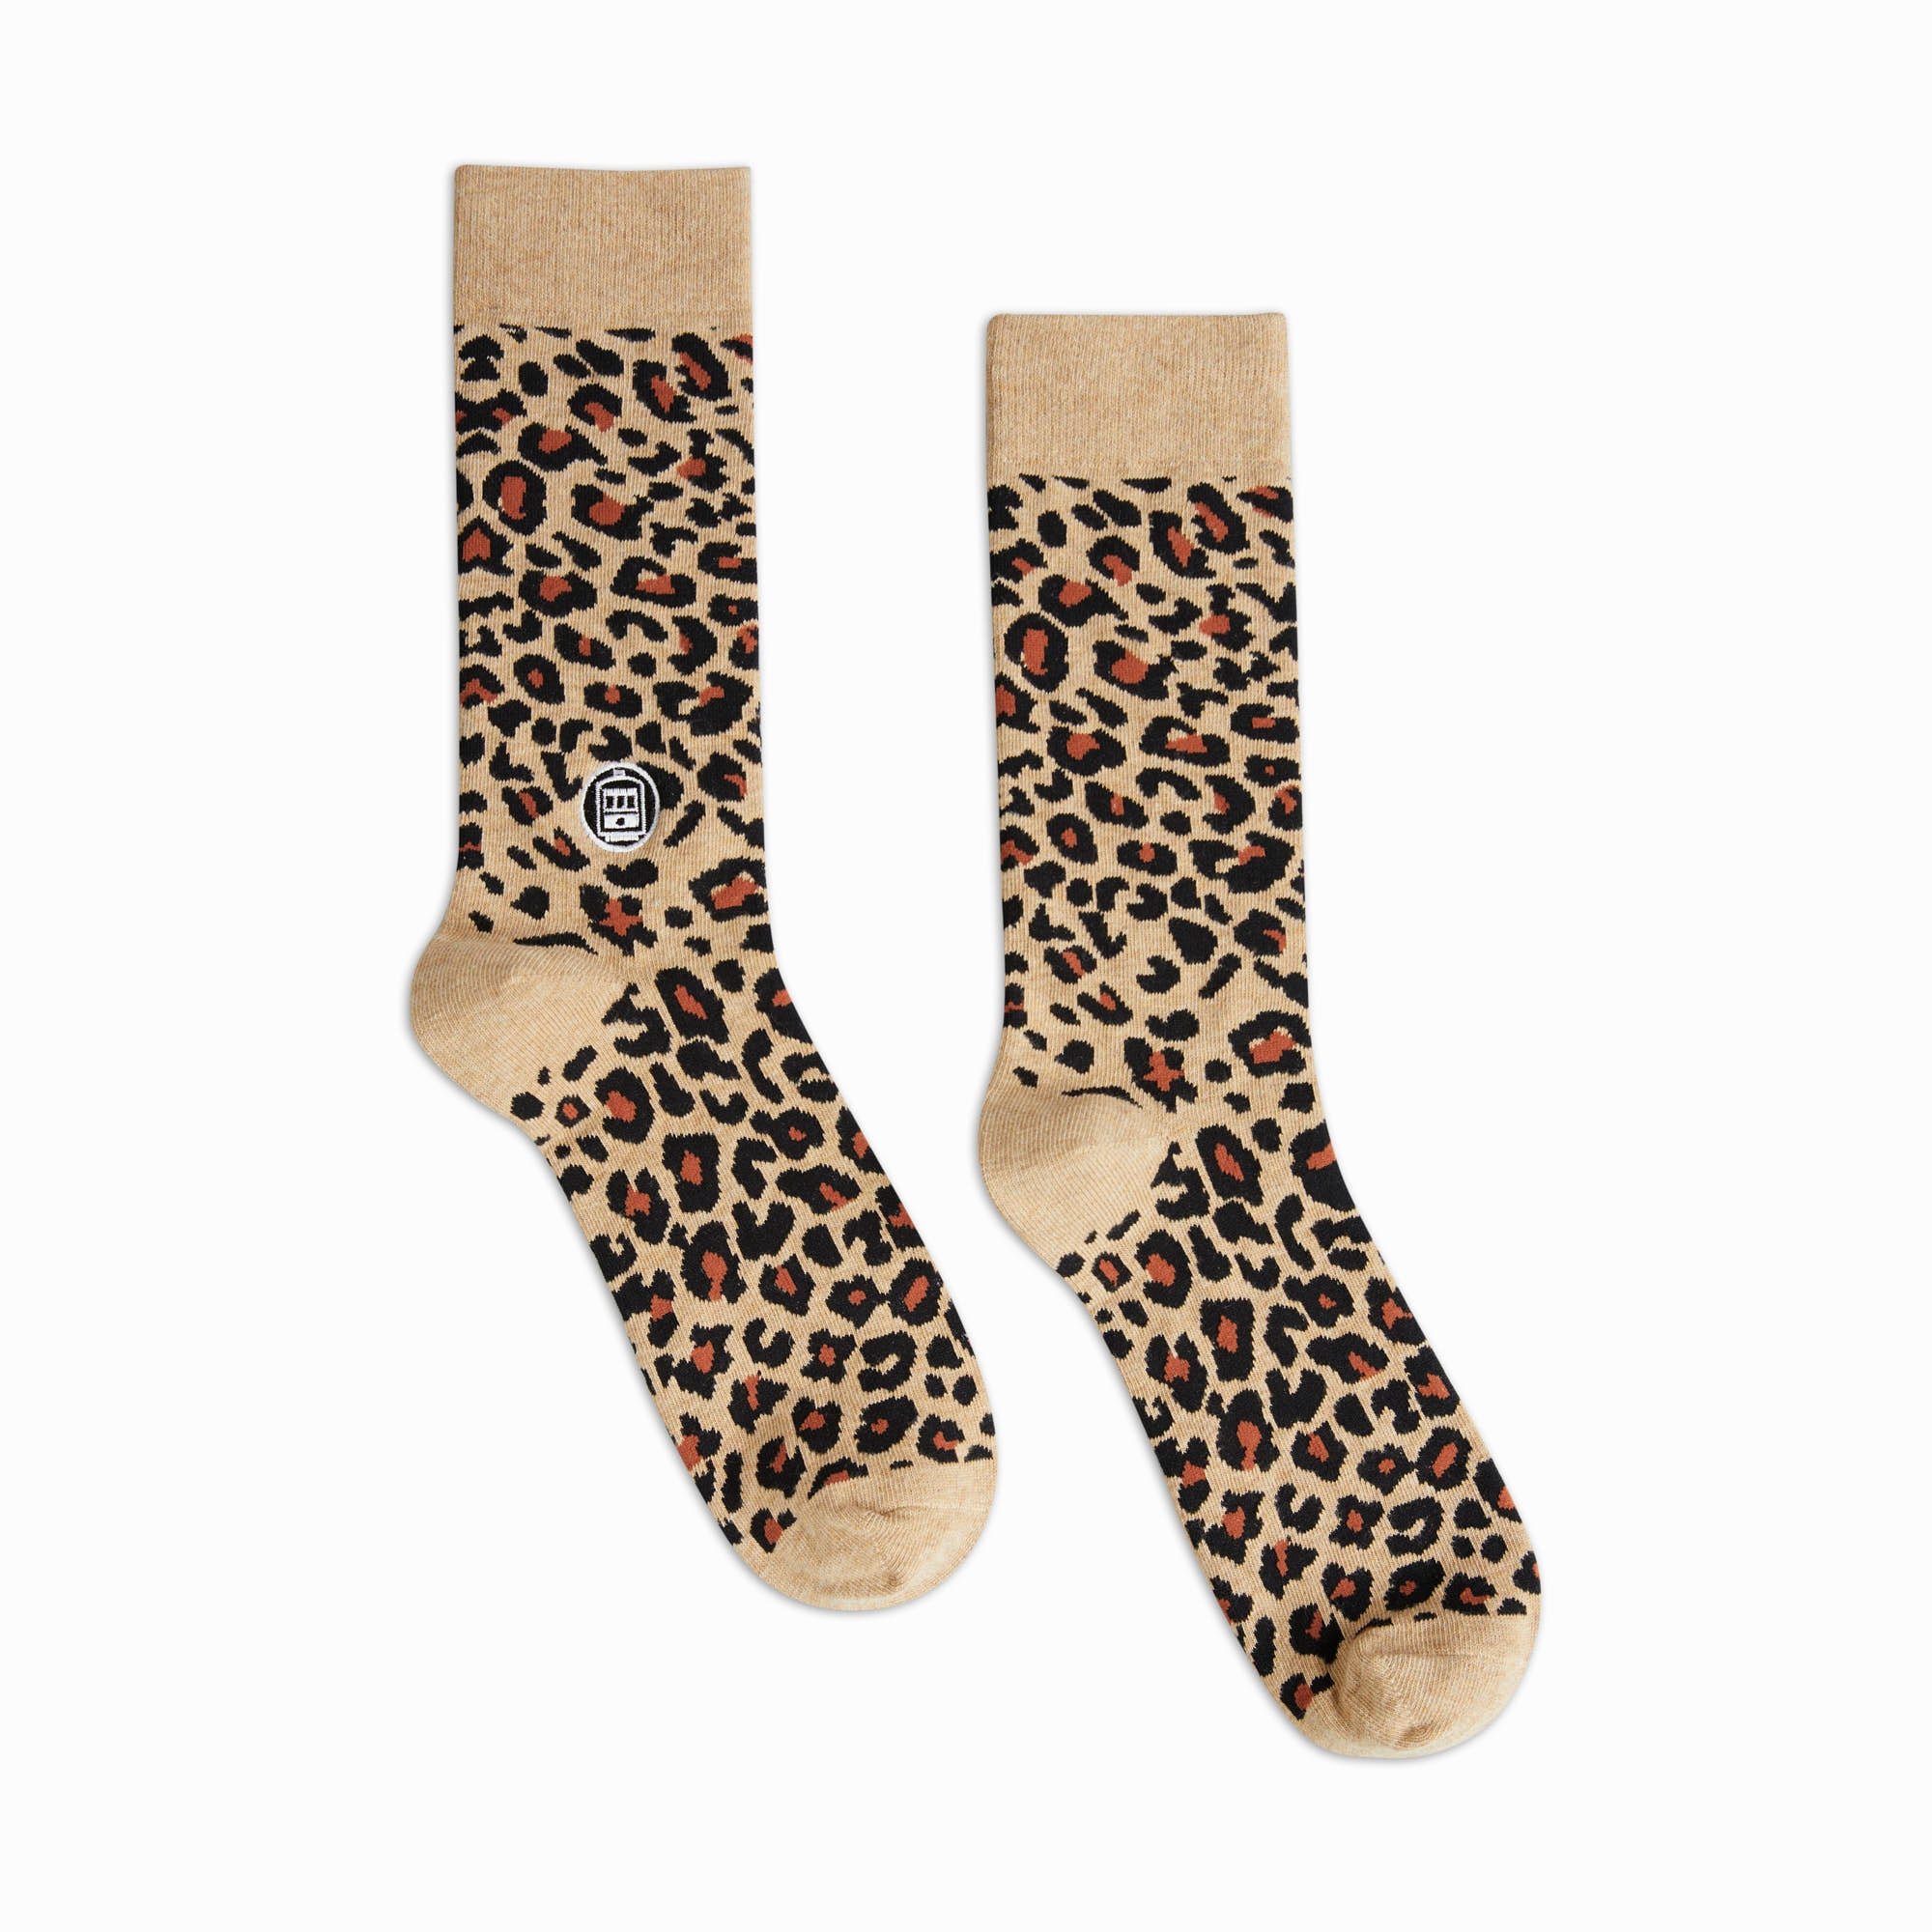 Bonfolk Leopard Socks 